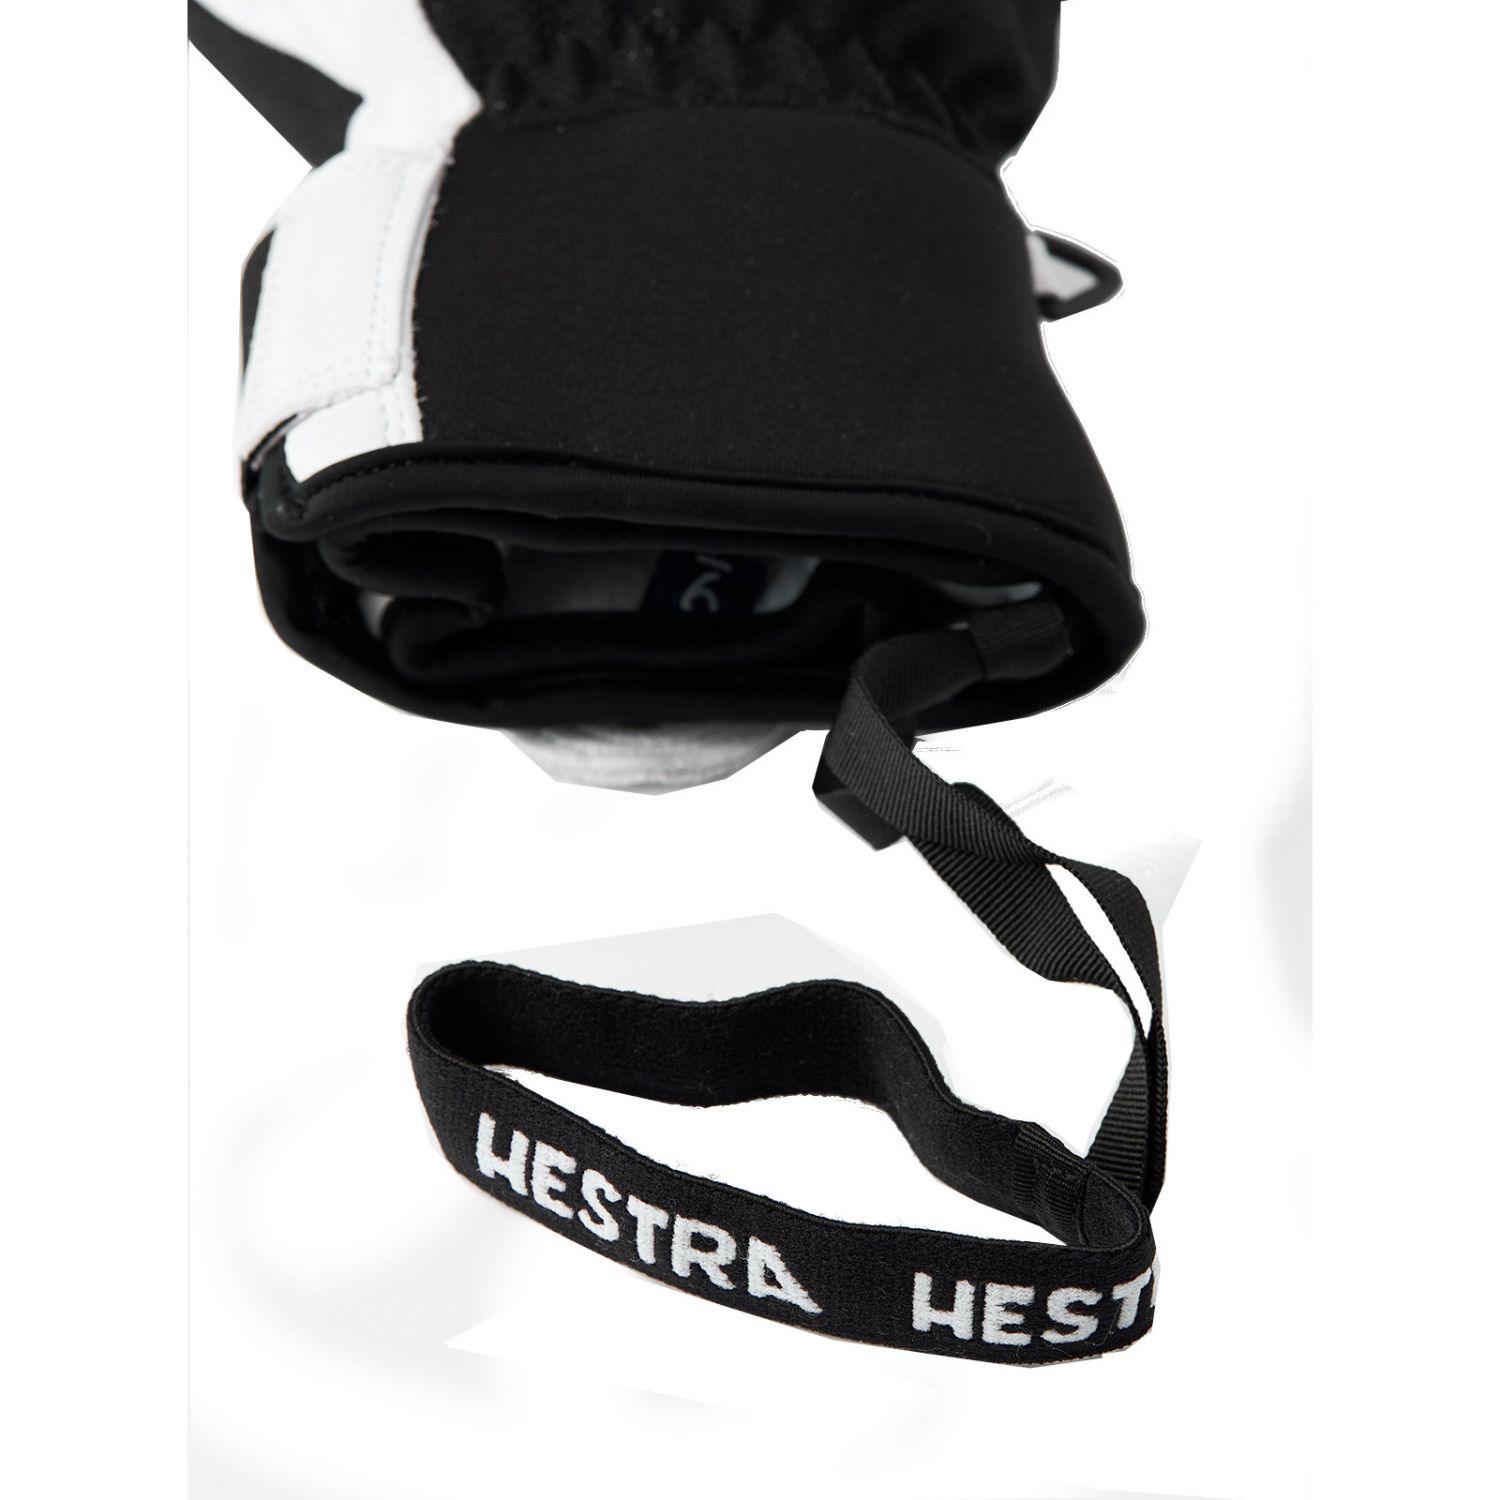 Hestra Army Leather Patrol skihandschoenen, zwart